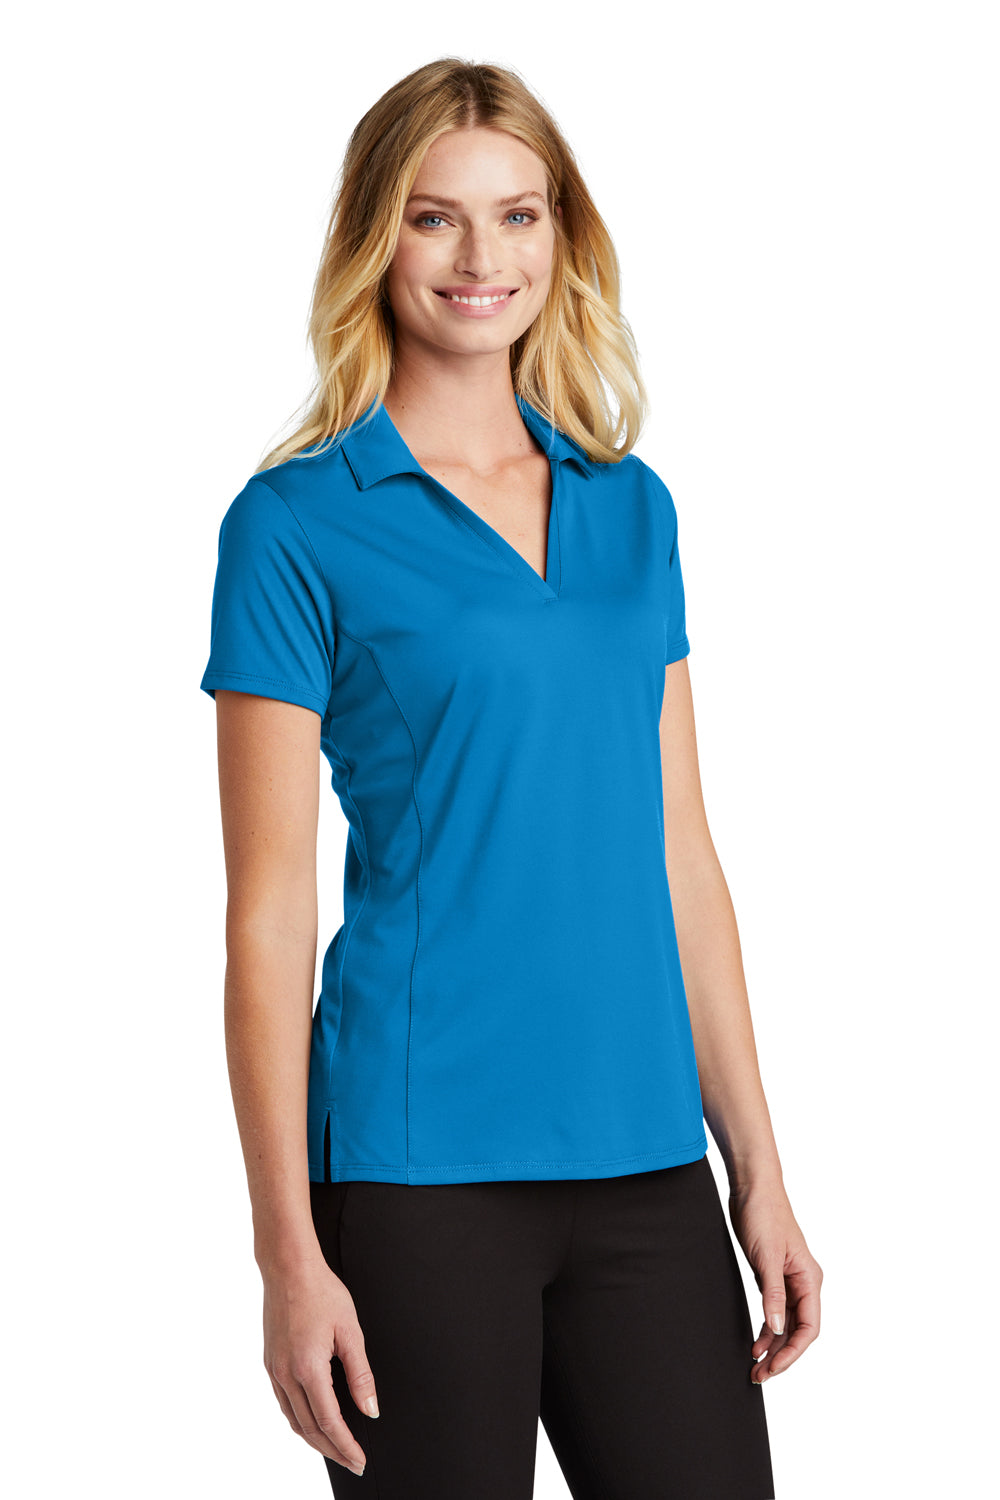 Port Authority LK398 Performance Staff Short Sleeve Polo Shirt Brilliant Blue 3Q